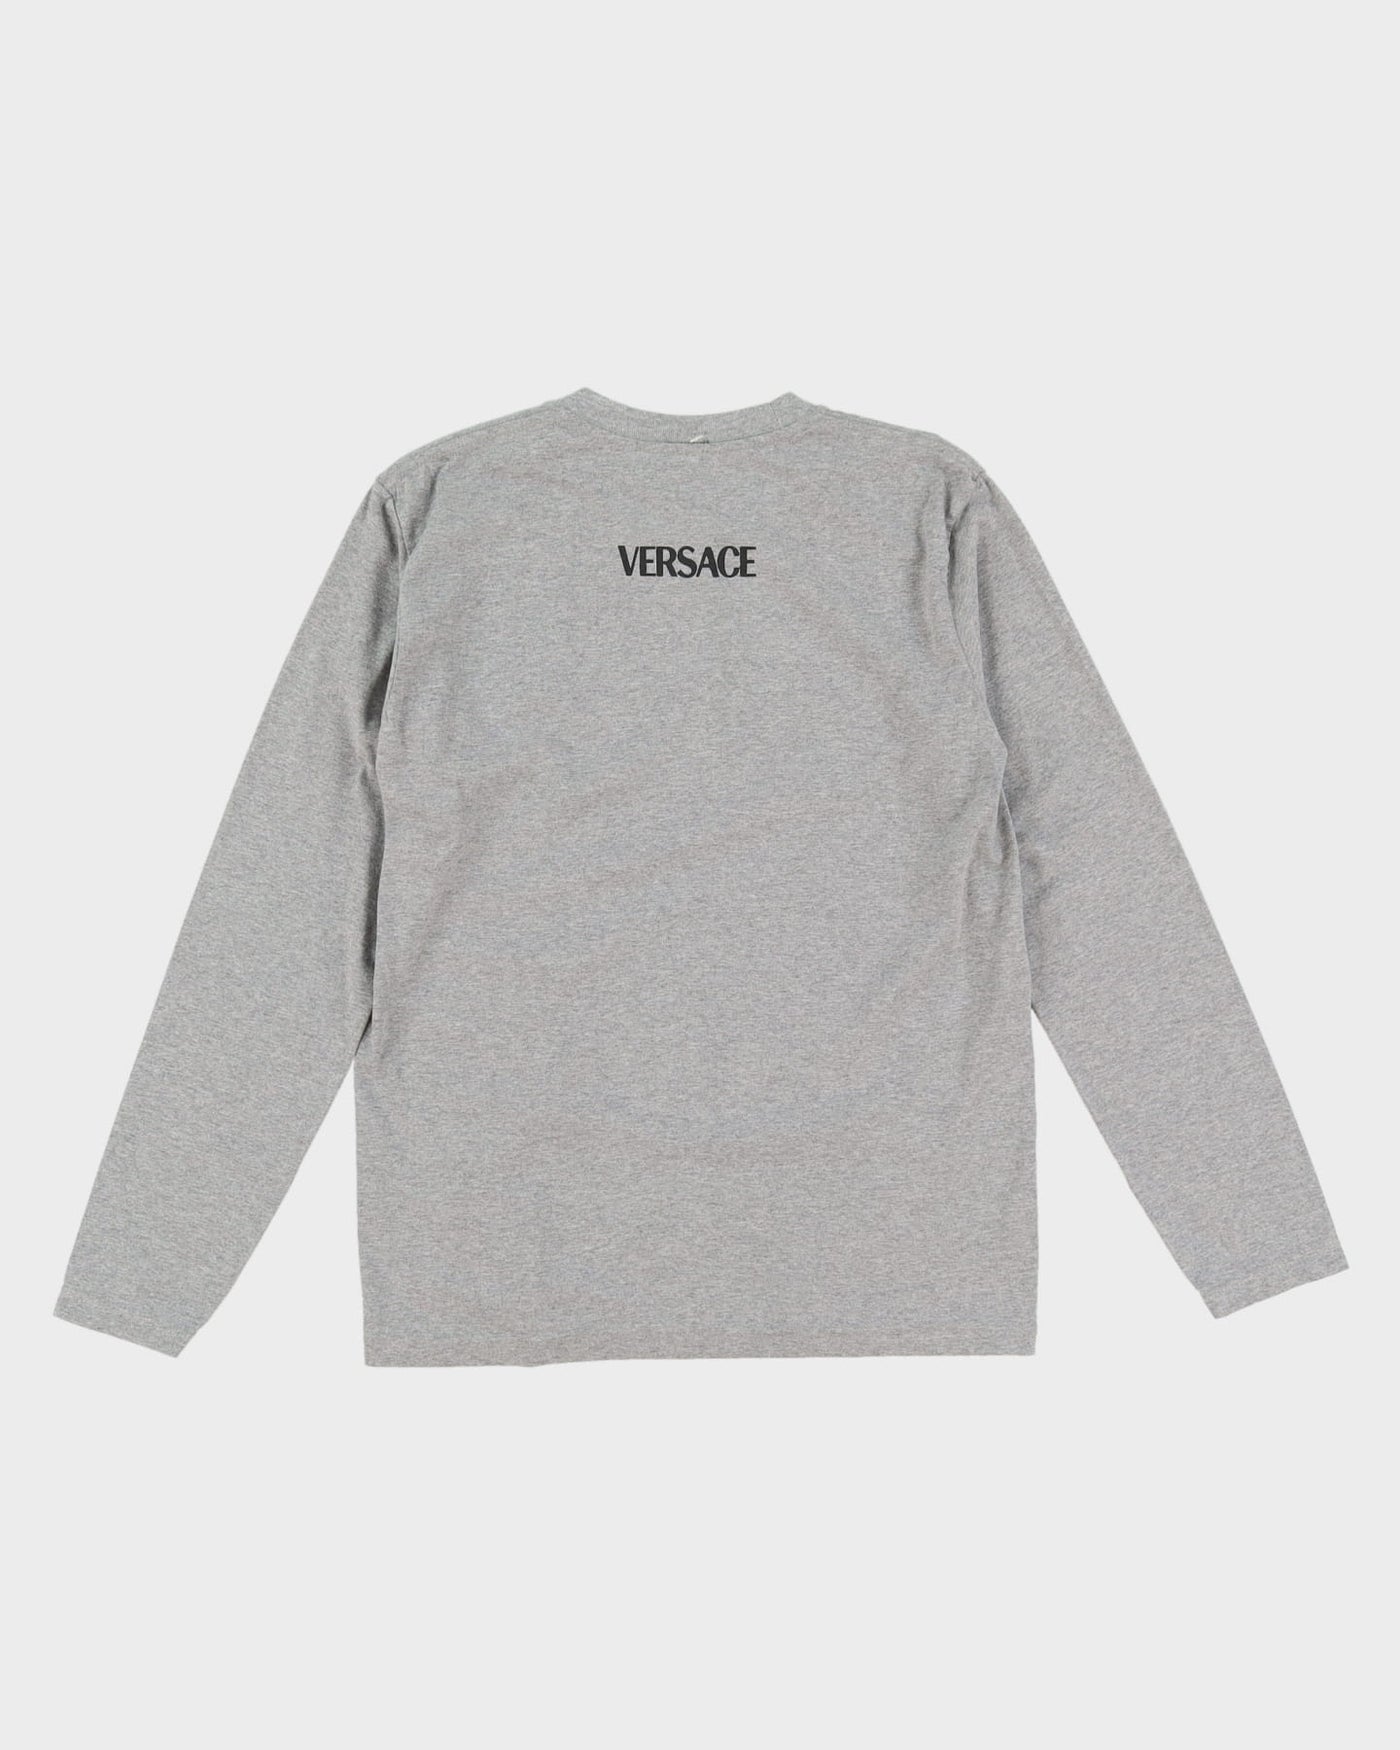 Versace Jeans Grey Long Sleeve T-Shirt - S / M